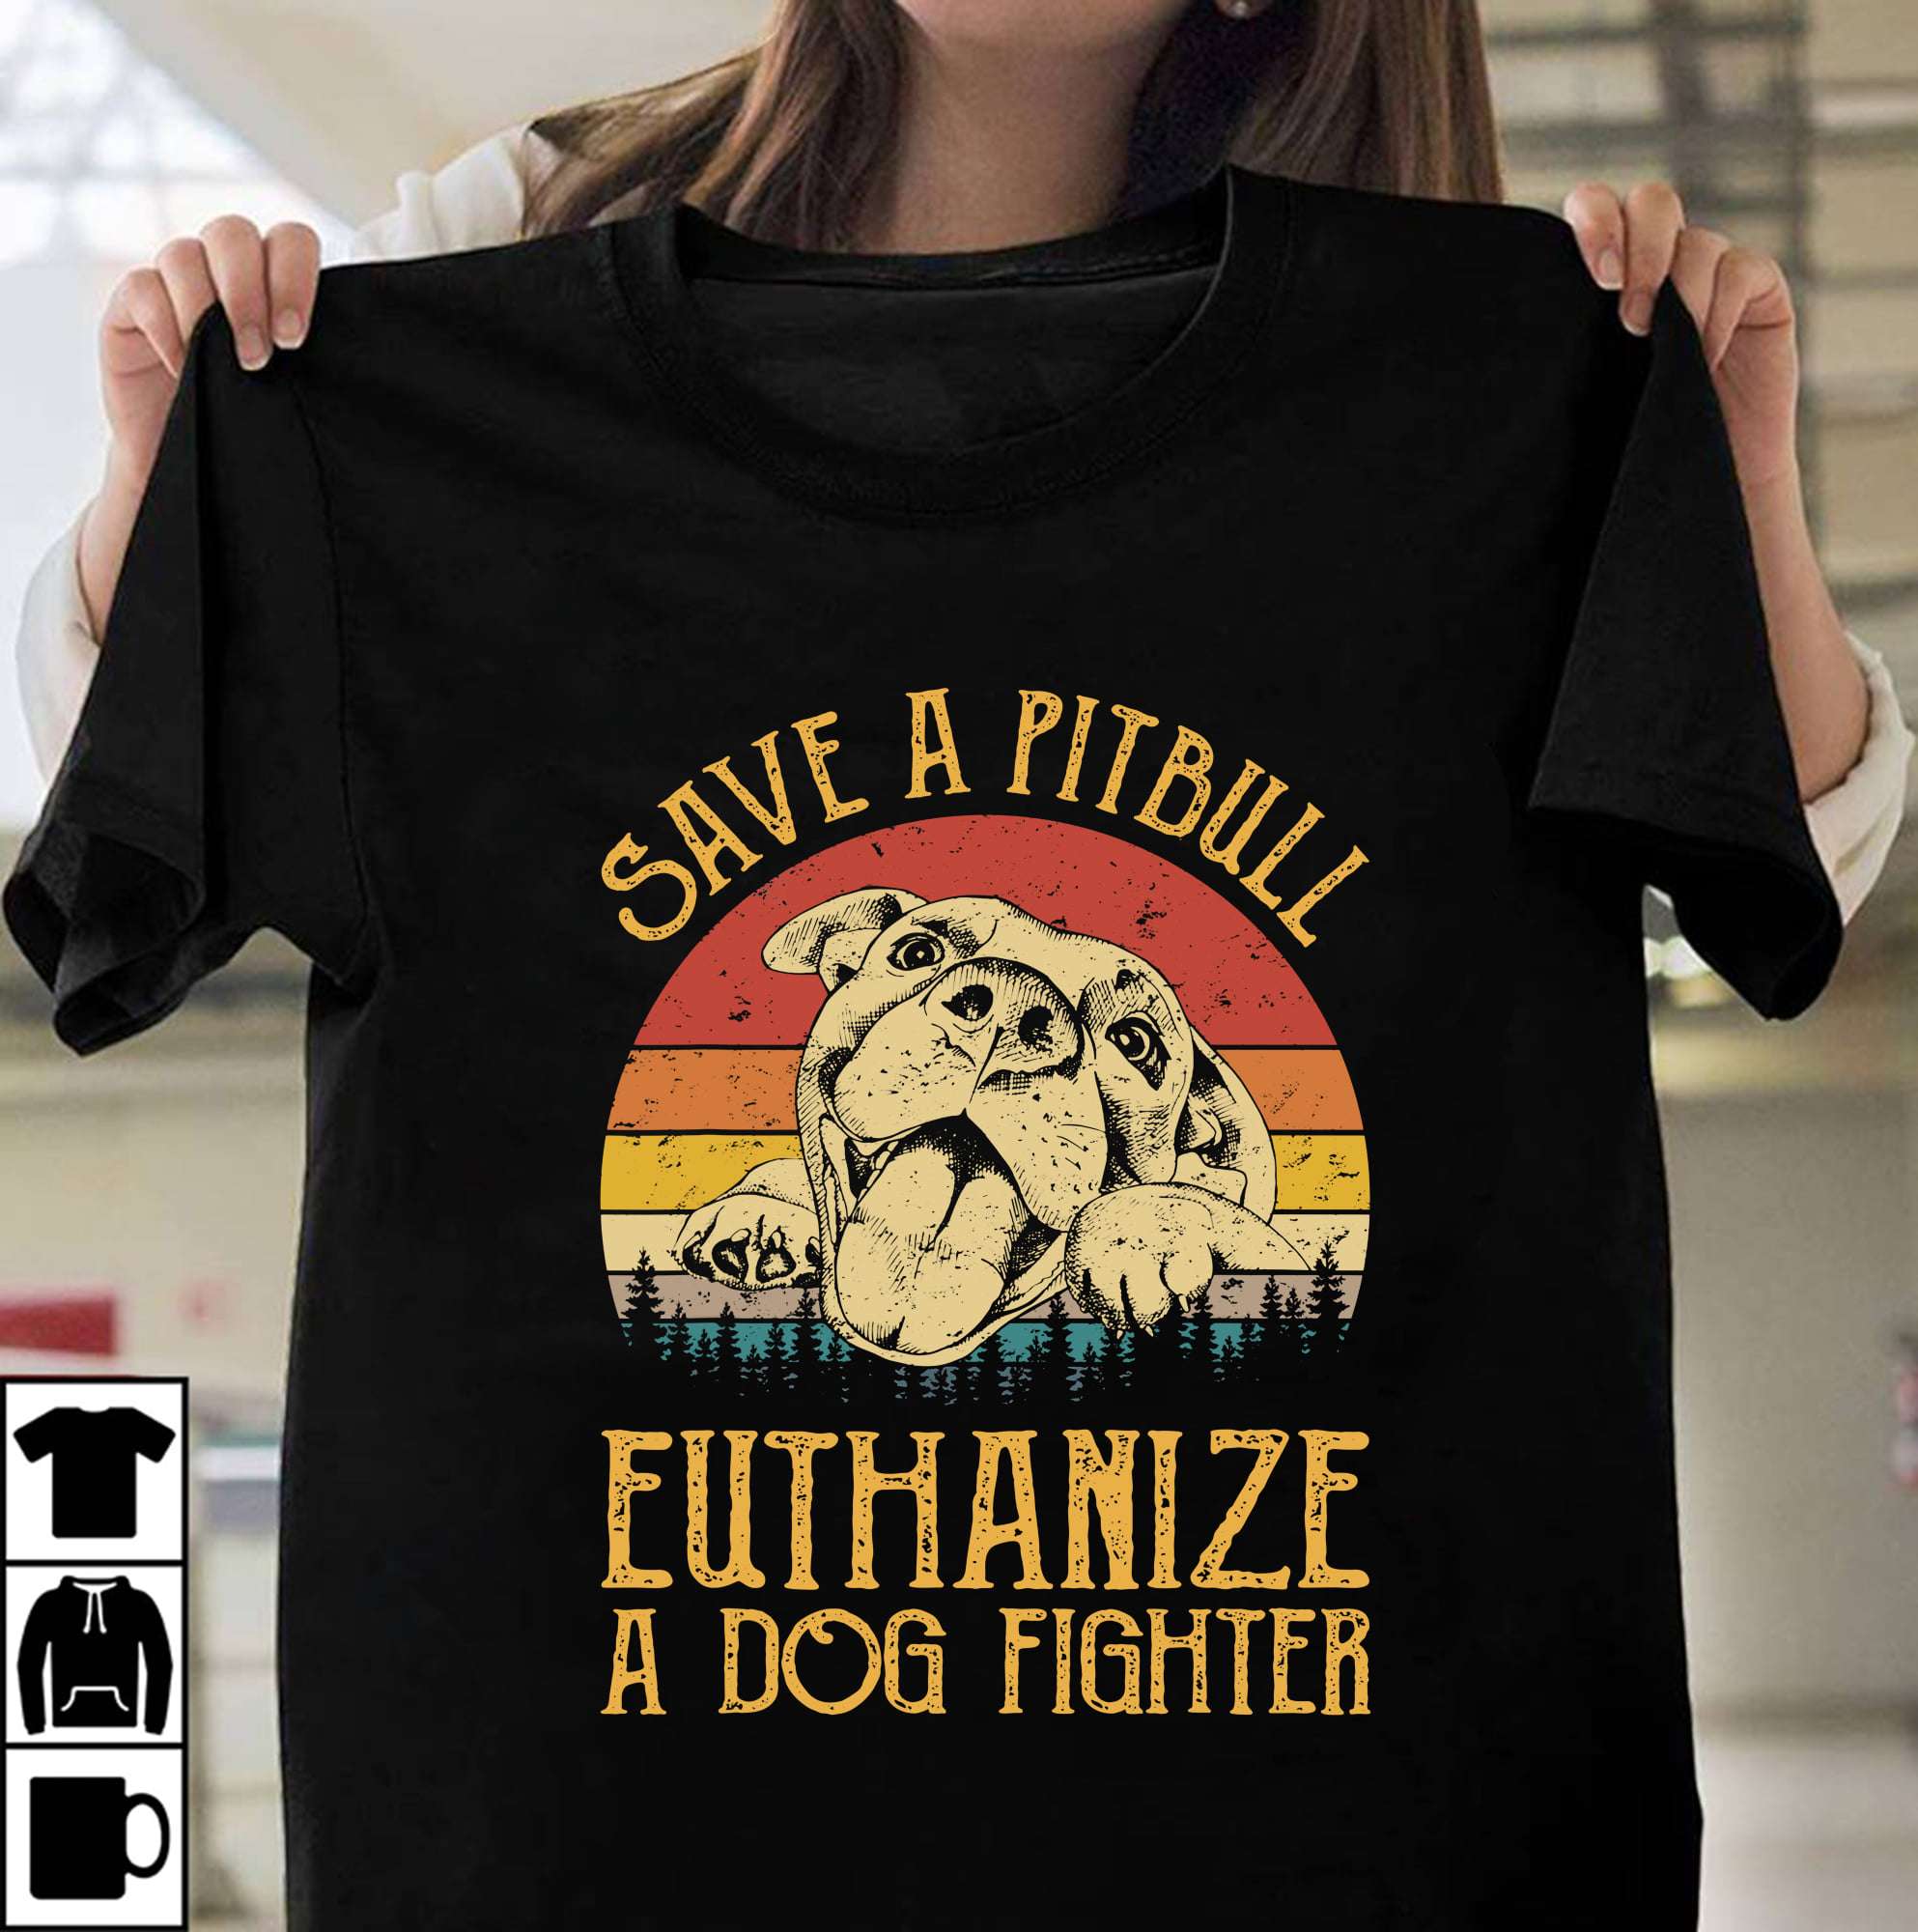 Save a Pitbull, euthanize a dog fighter - Pitbull dog lover